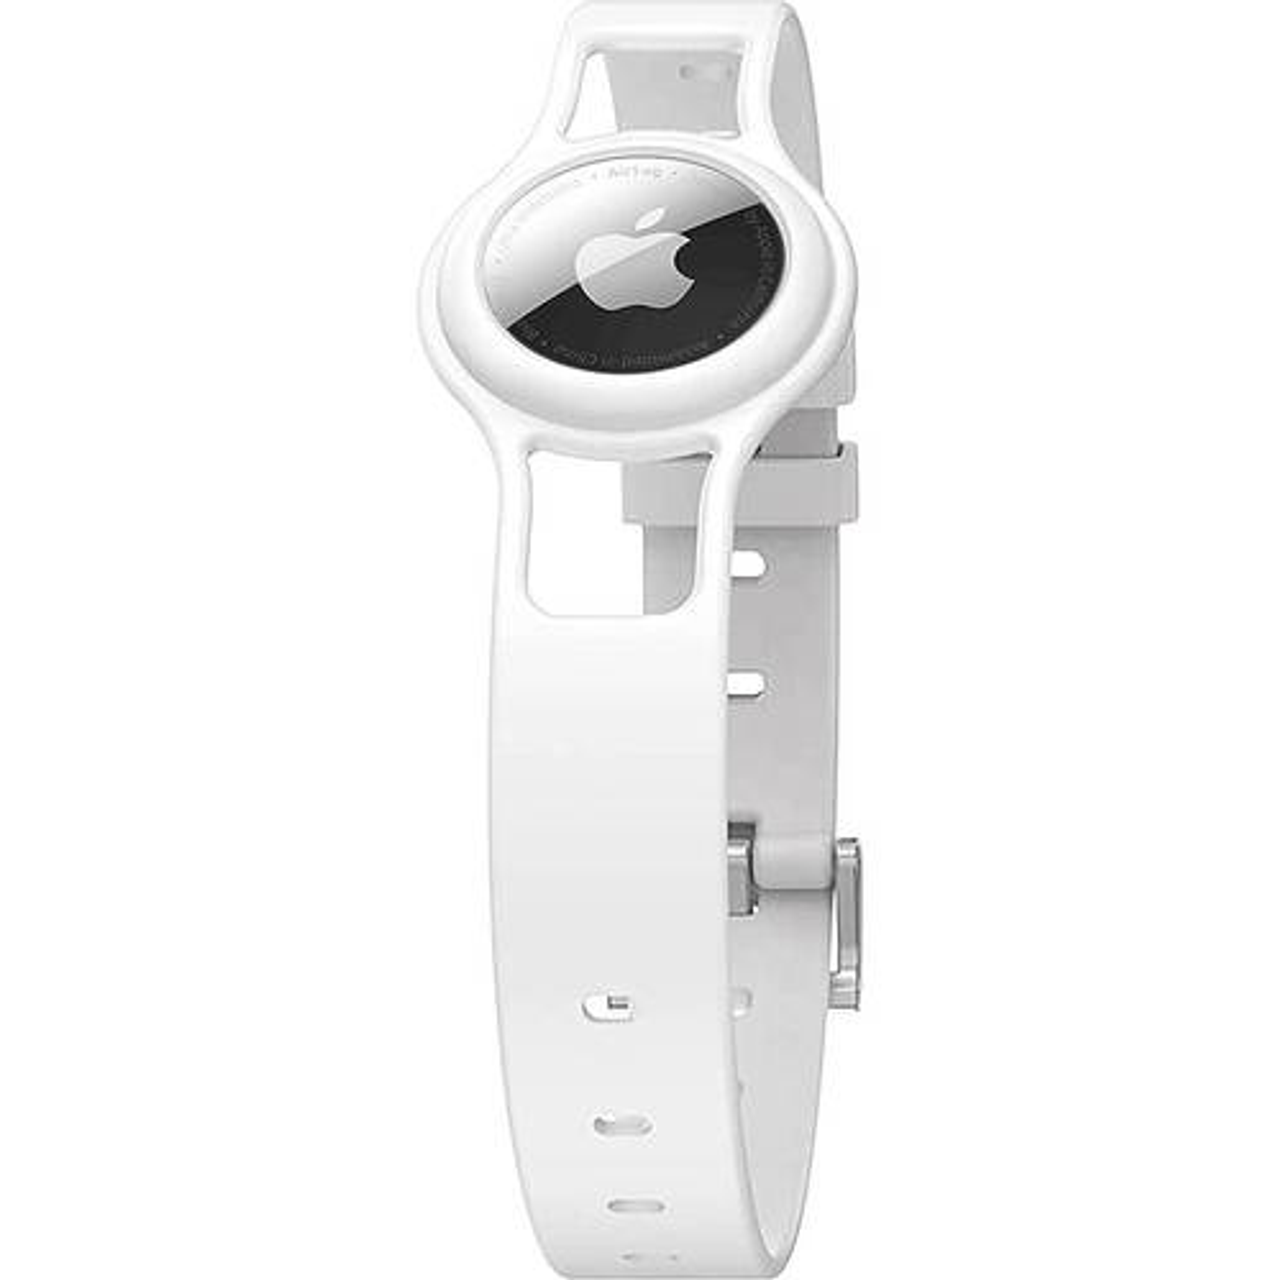 SaharaCase - Silicone Dog Collar for Apple AirTag - White